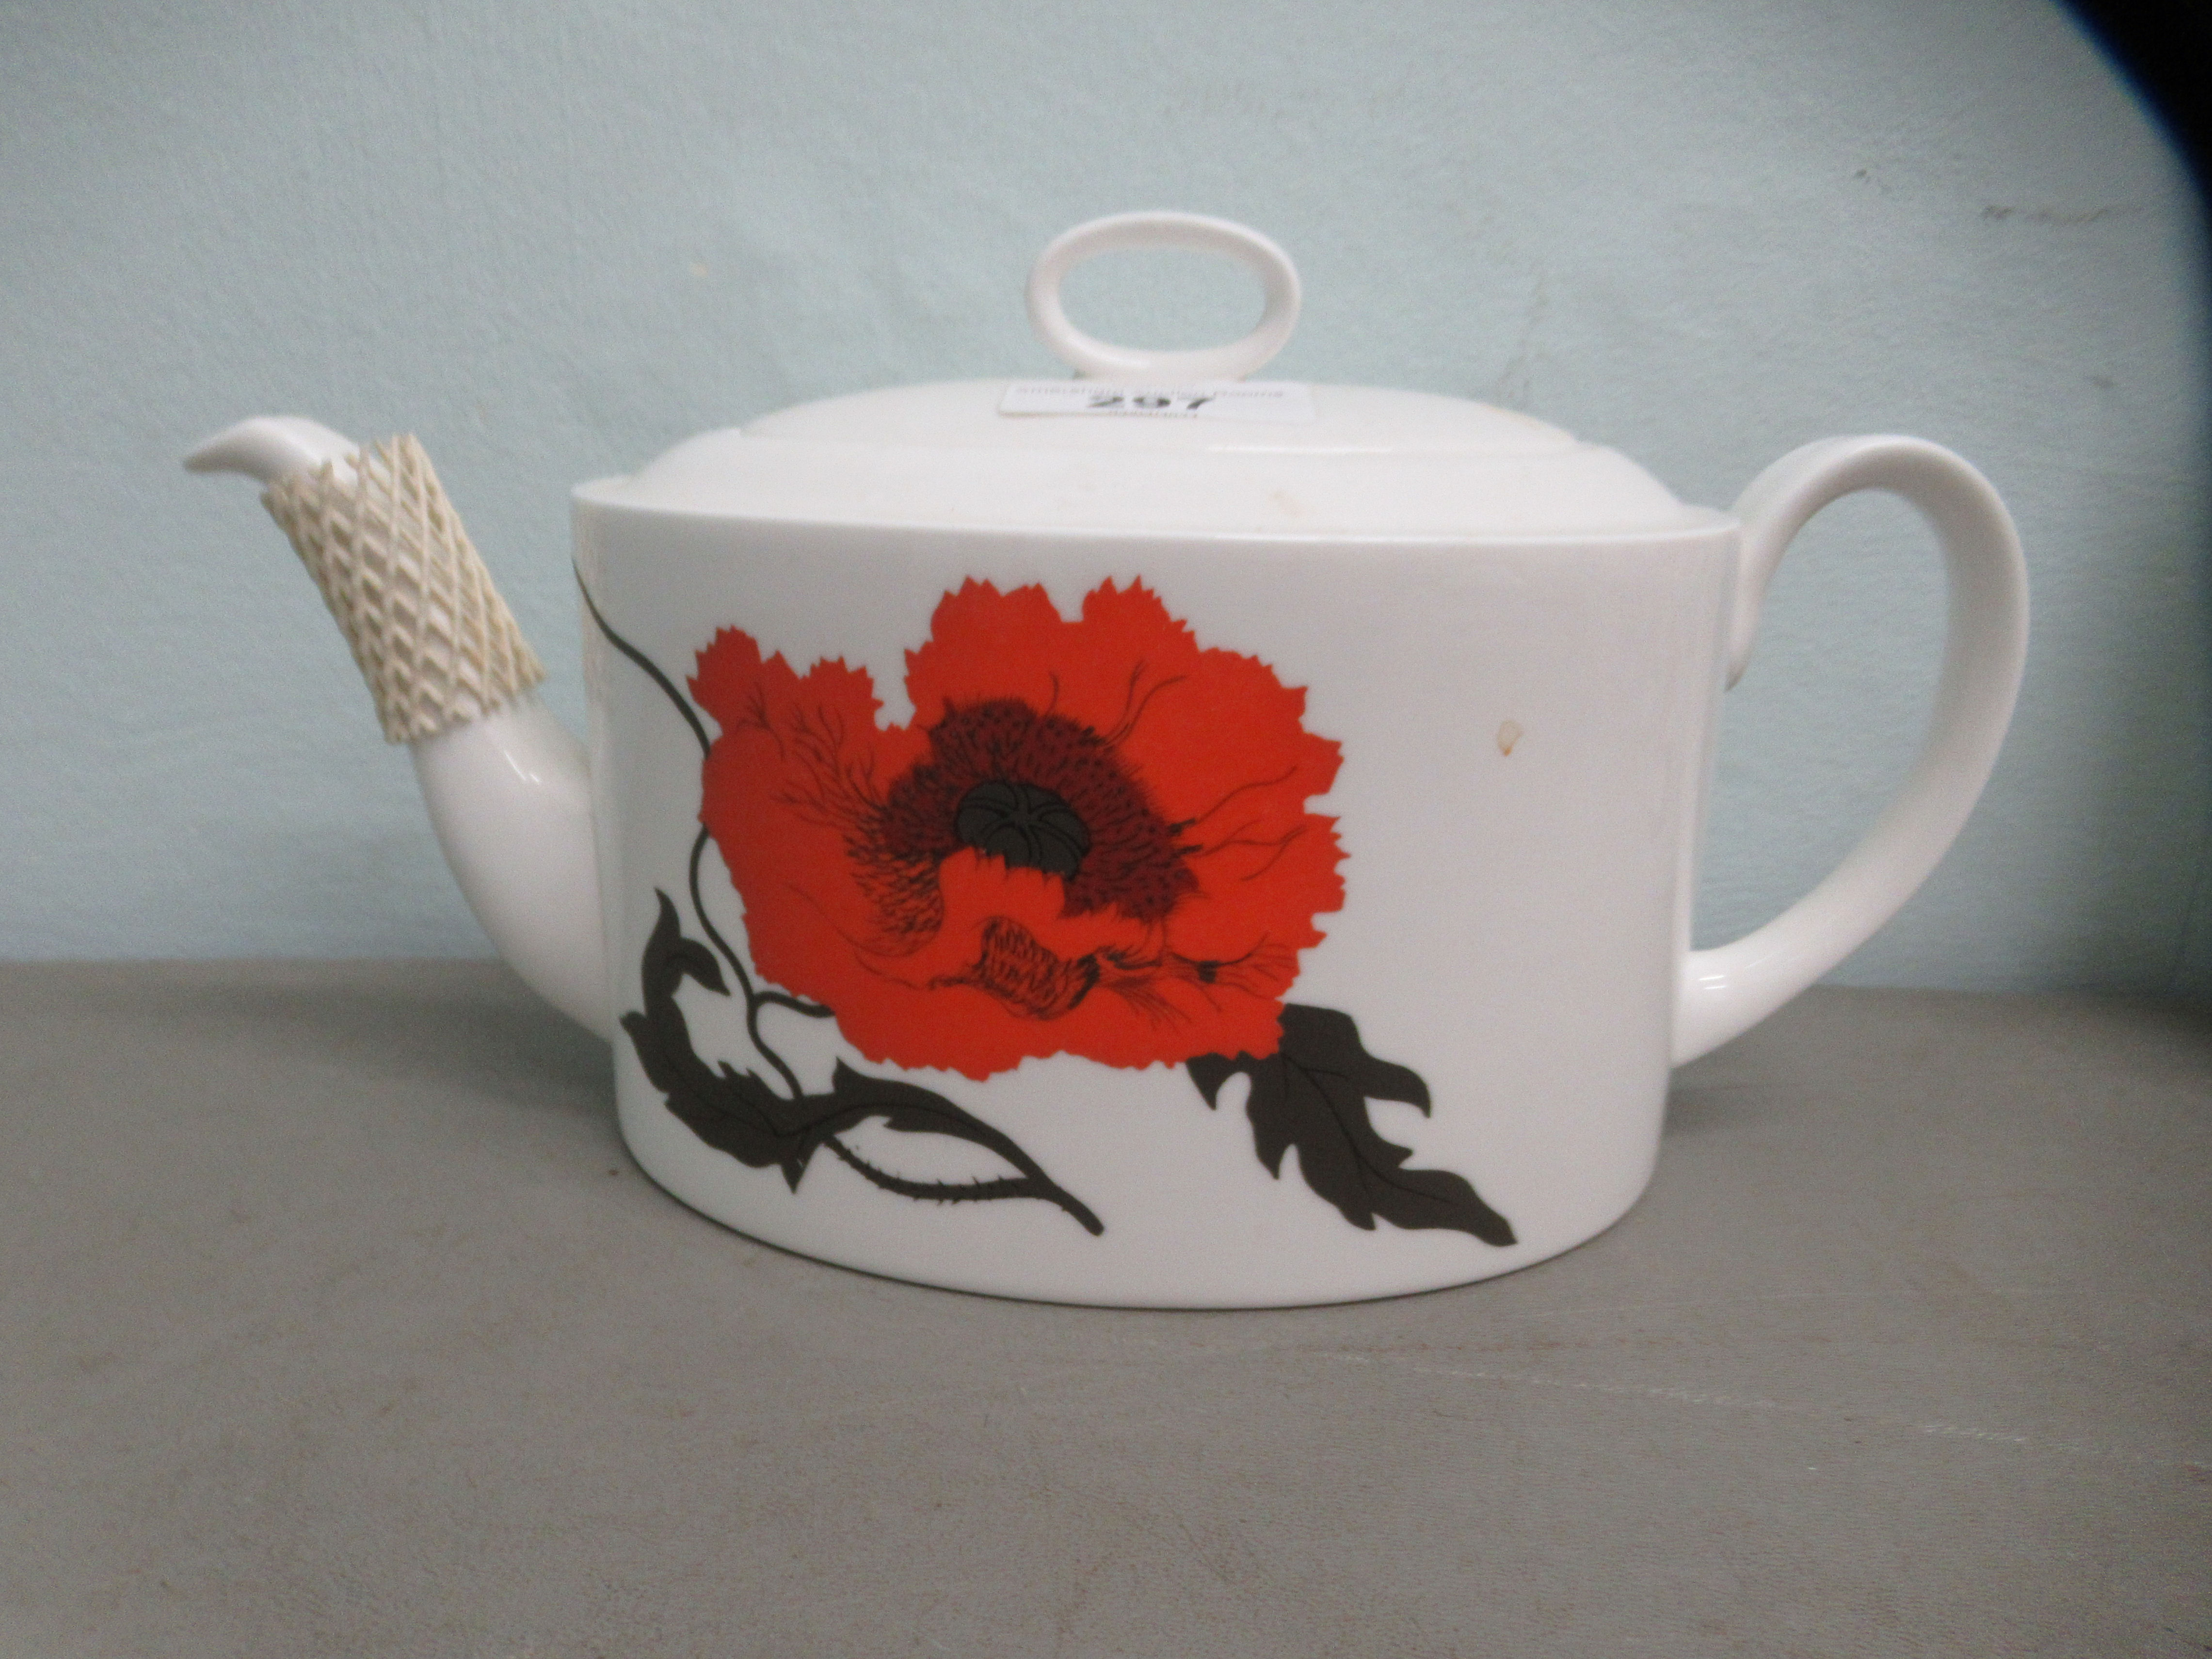 Susie Cooper design for Wedgwood bone china Cornpoppy pattern teaware - Image 2 of 4